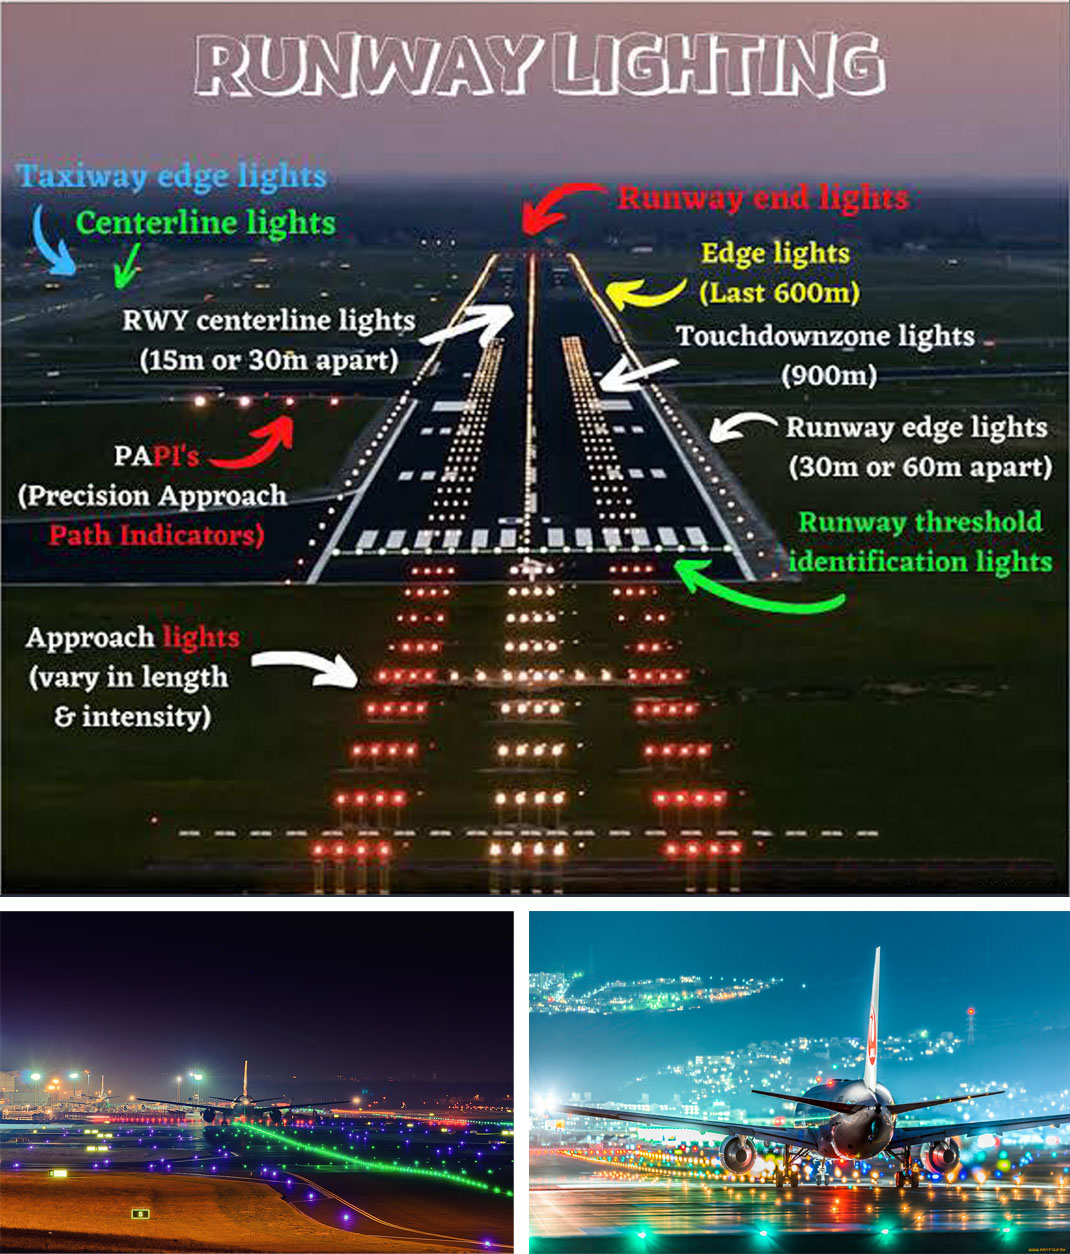 Runway Inset Centerline Light